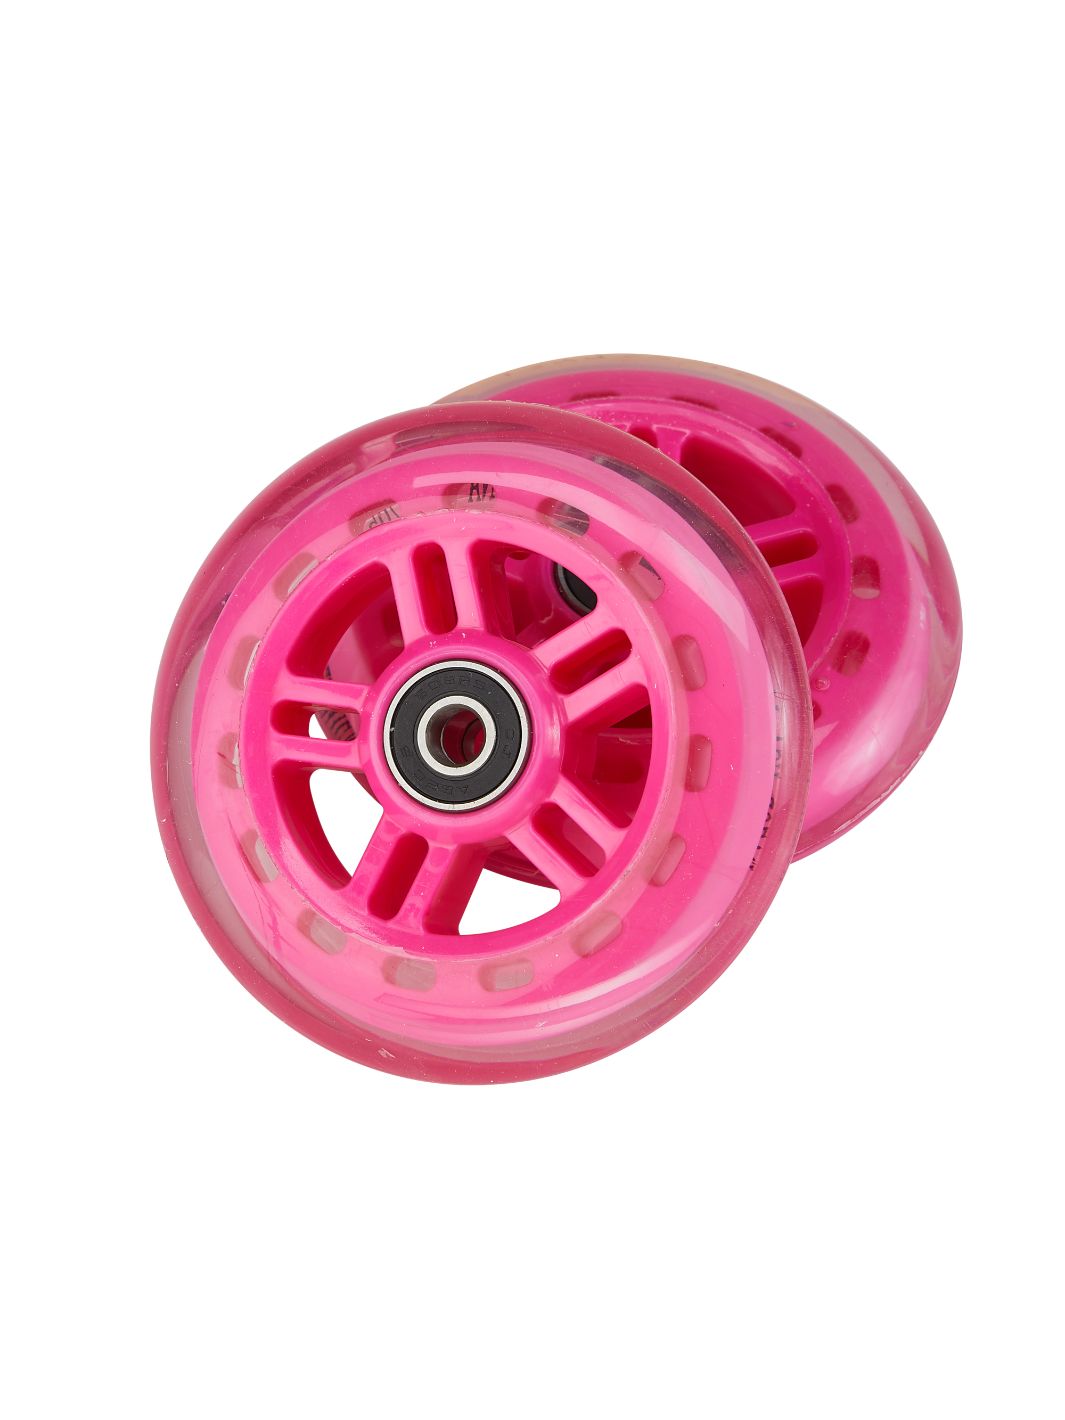 A Kick 98mm Wheels w/Bearings - Pink (Set of 2)